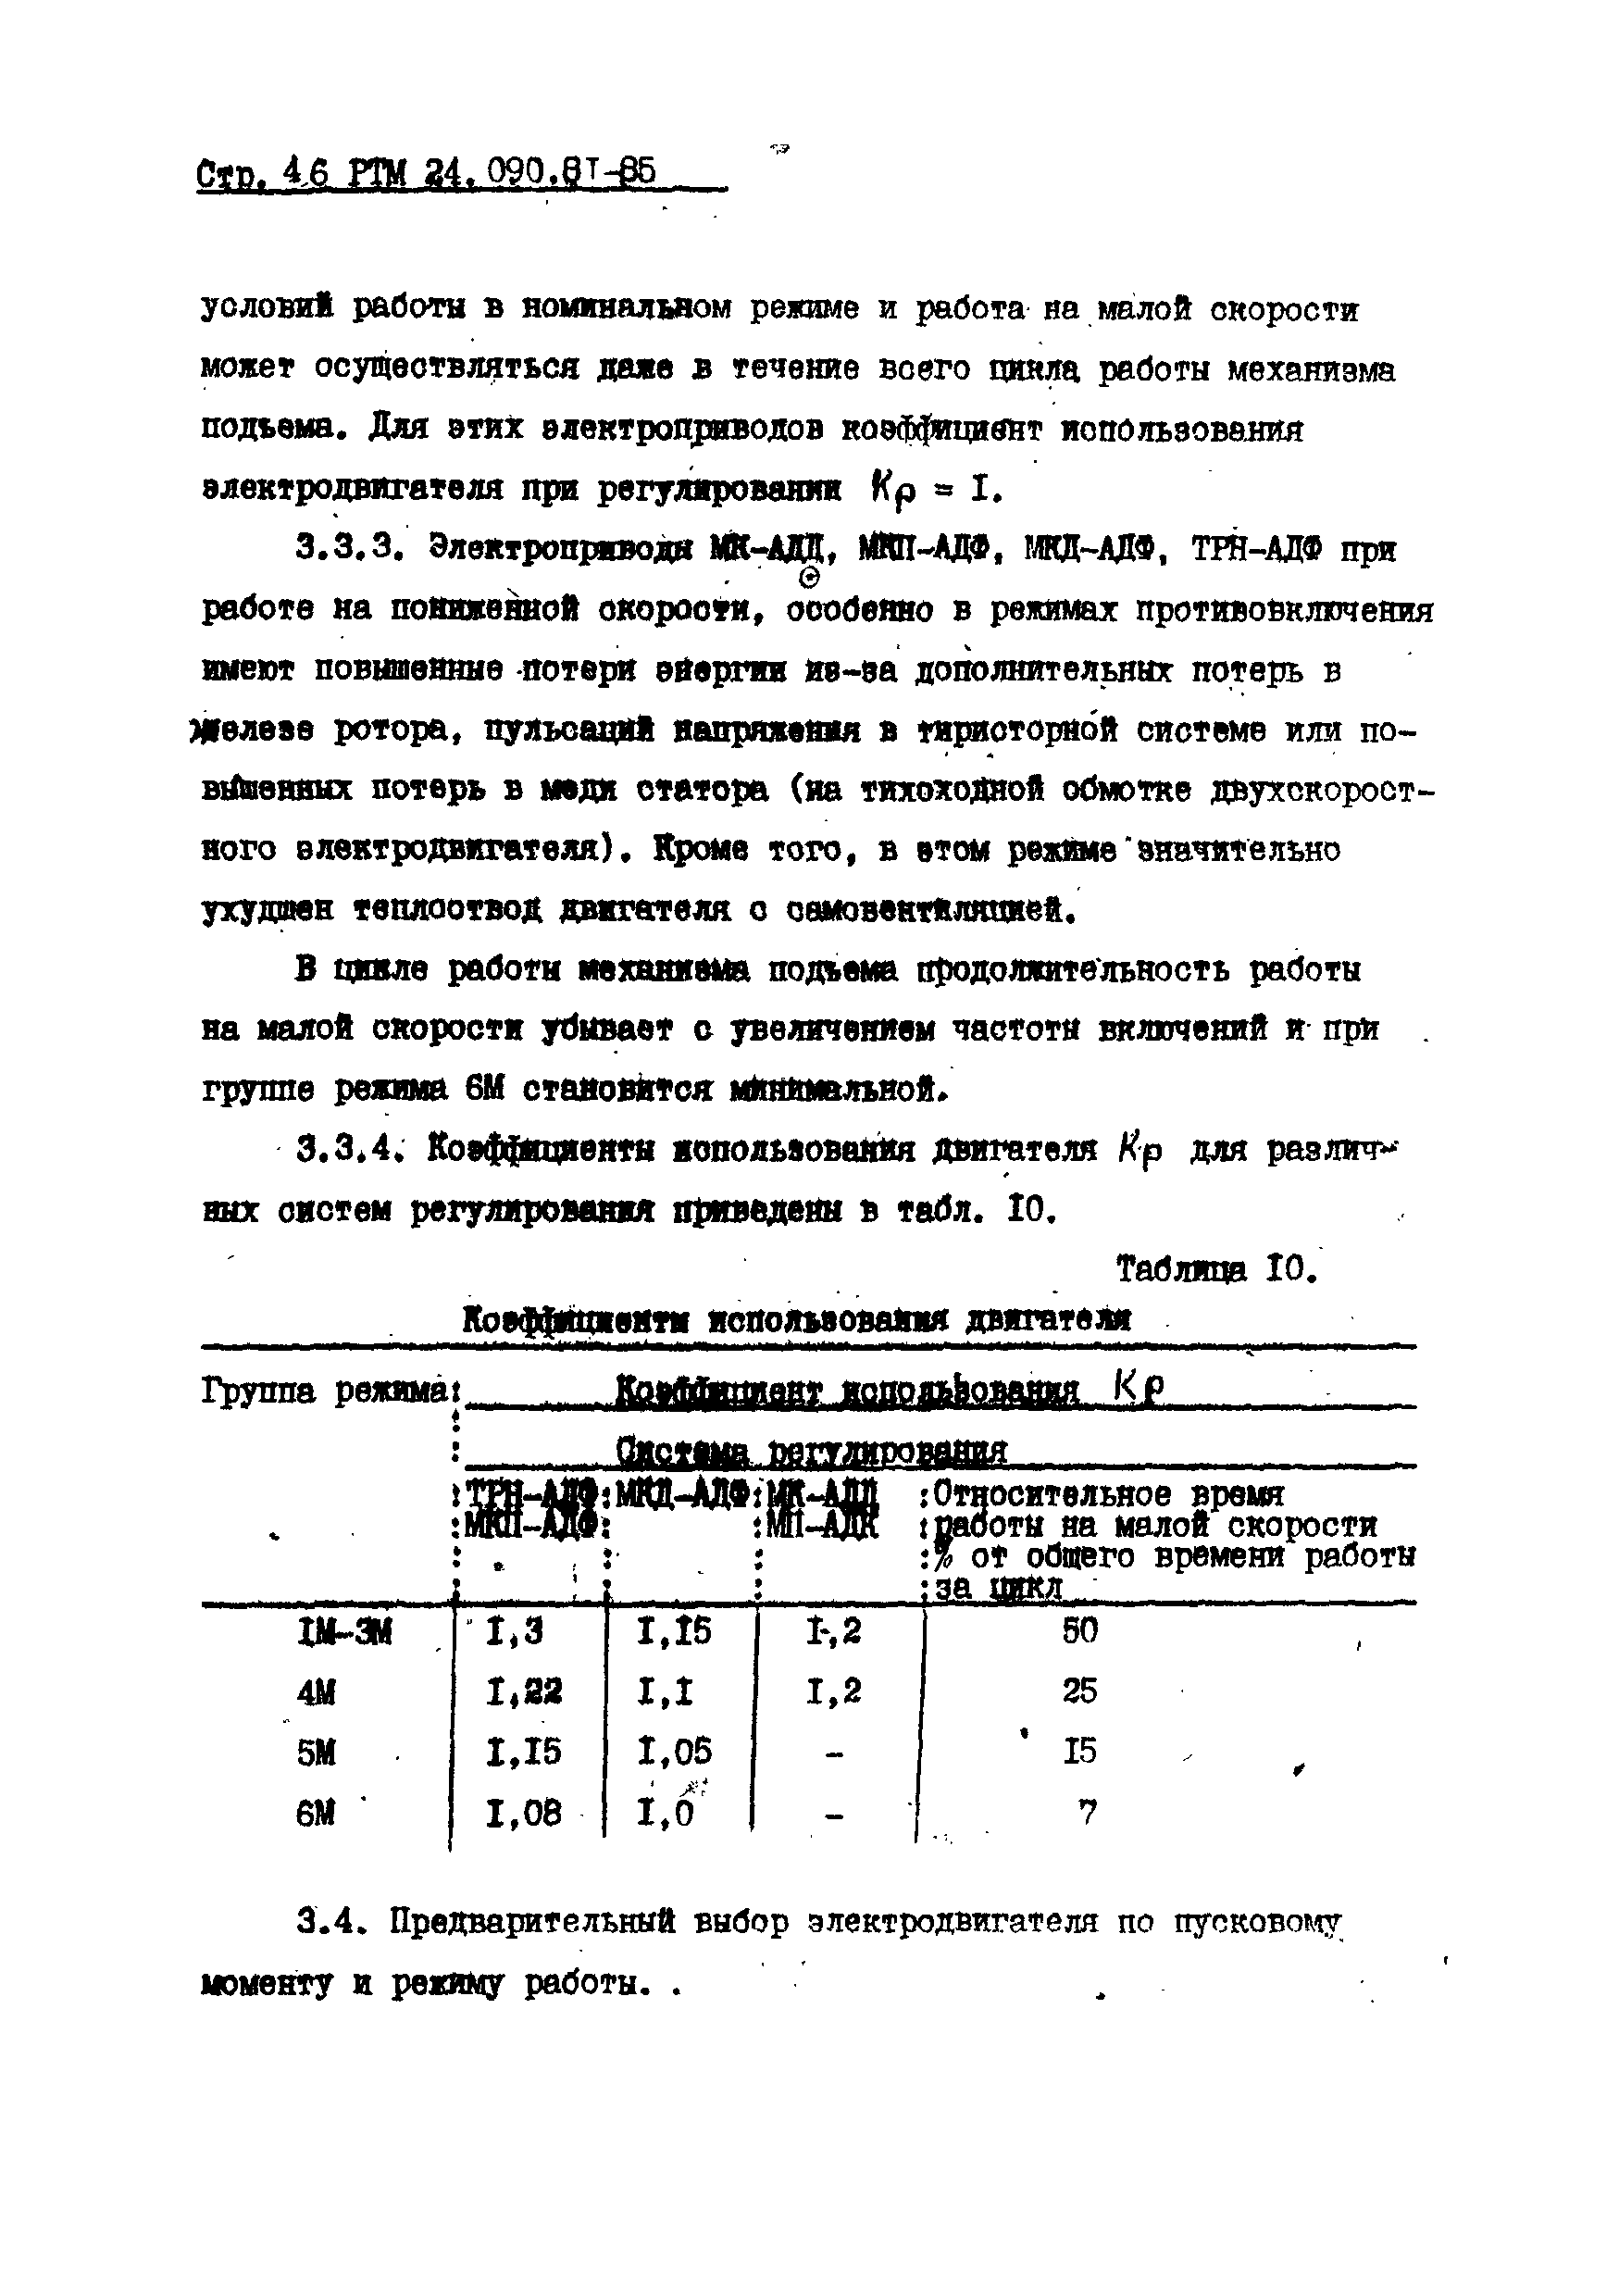 РТМ 24.090.81-85